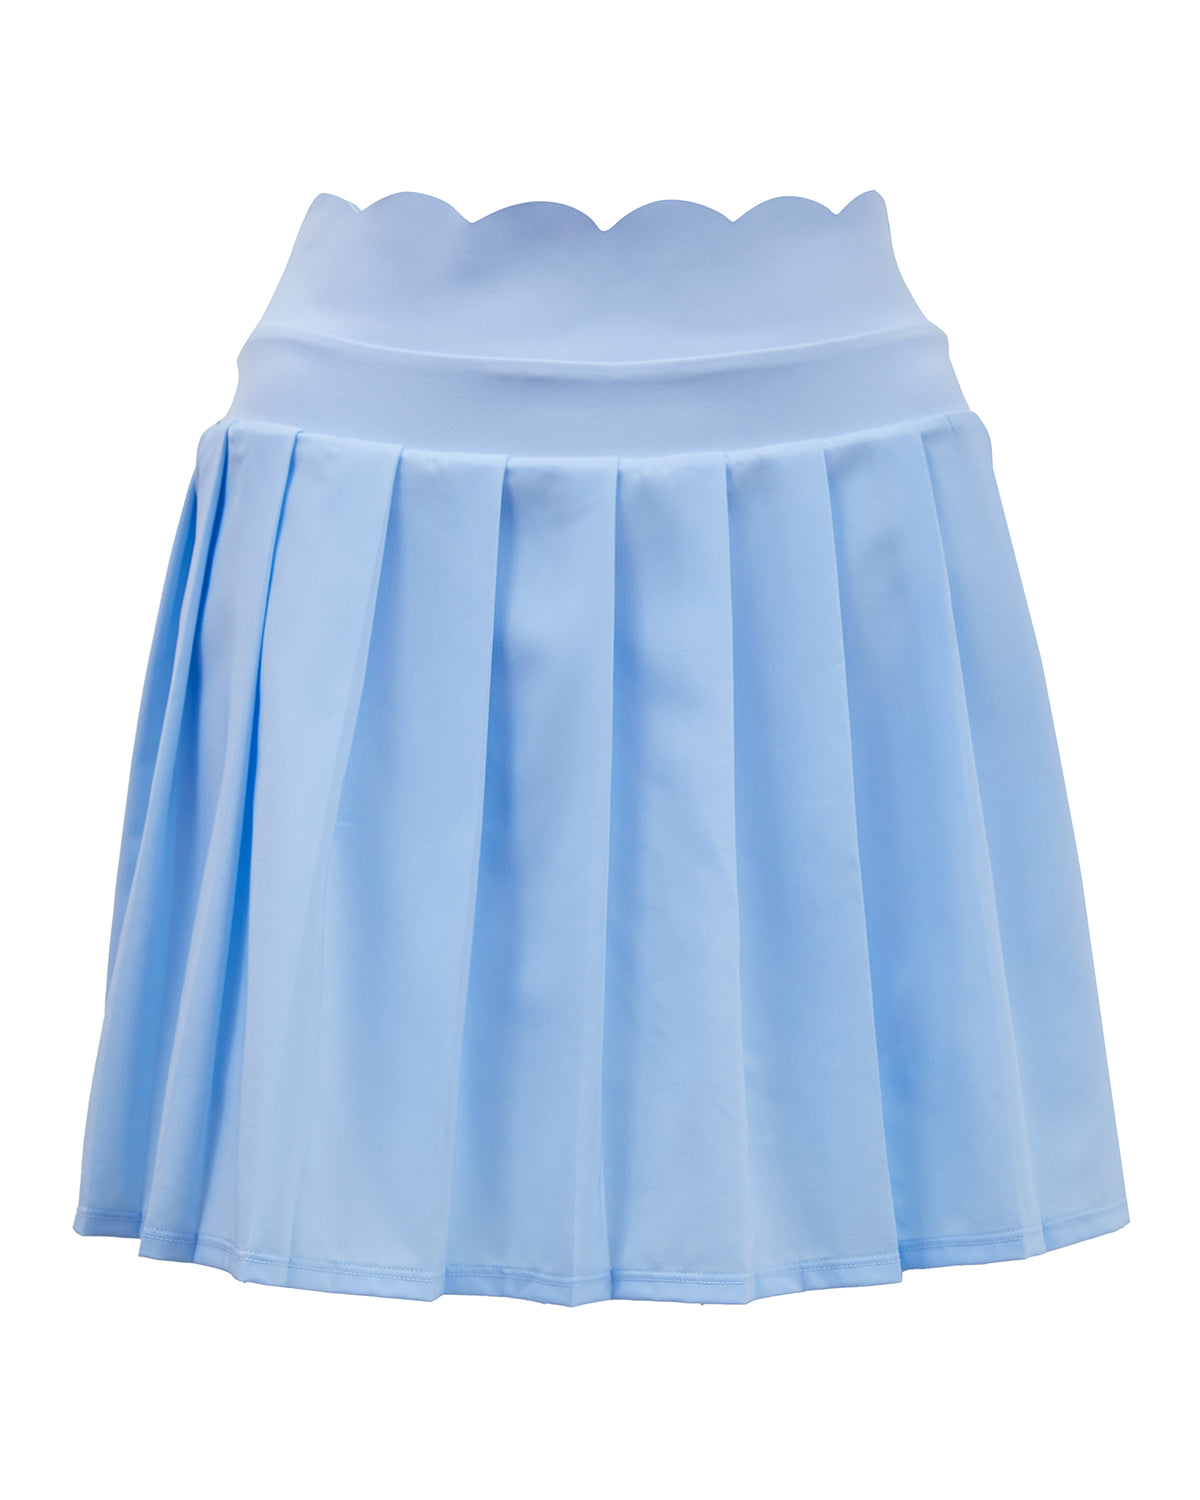 Endear Skirt in Baby Blue